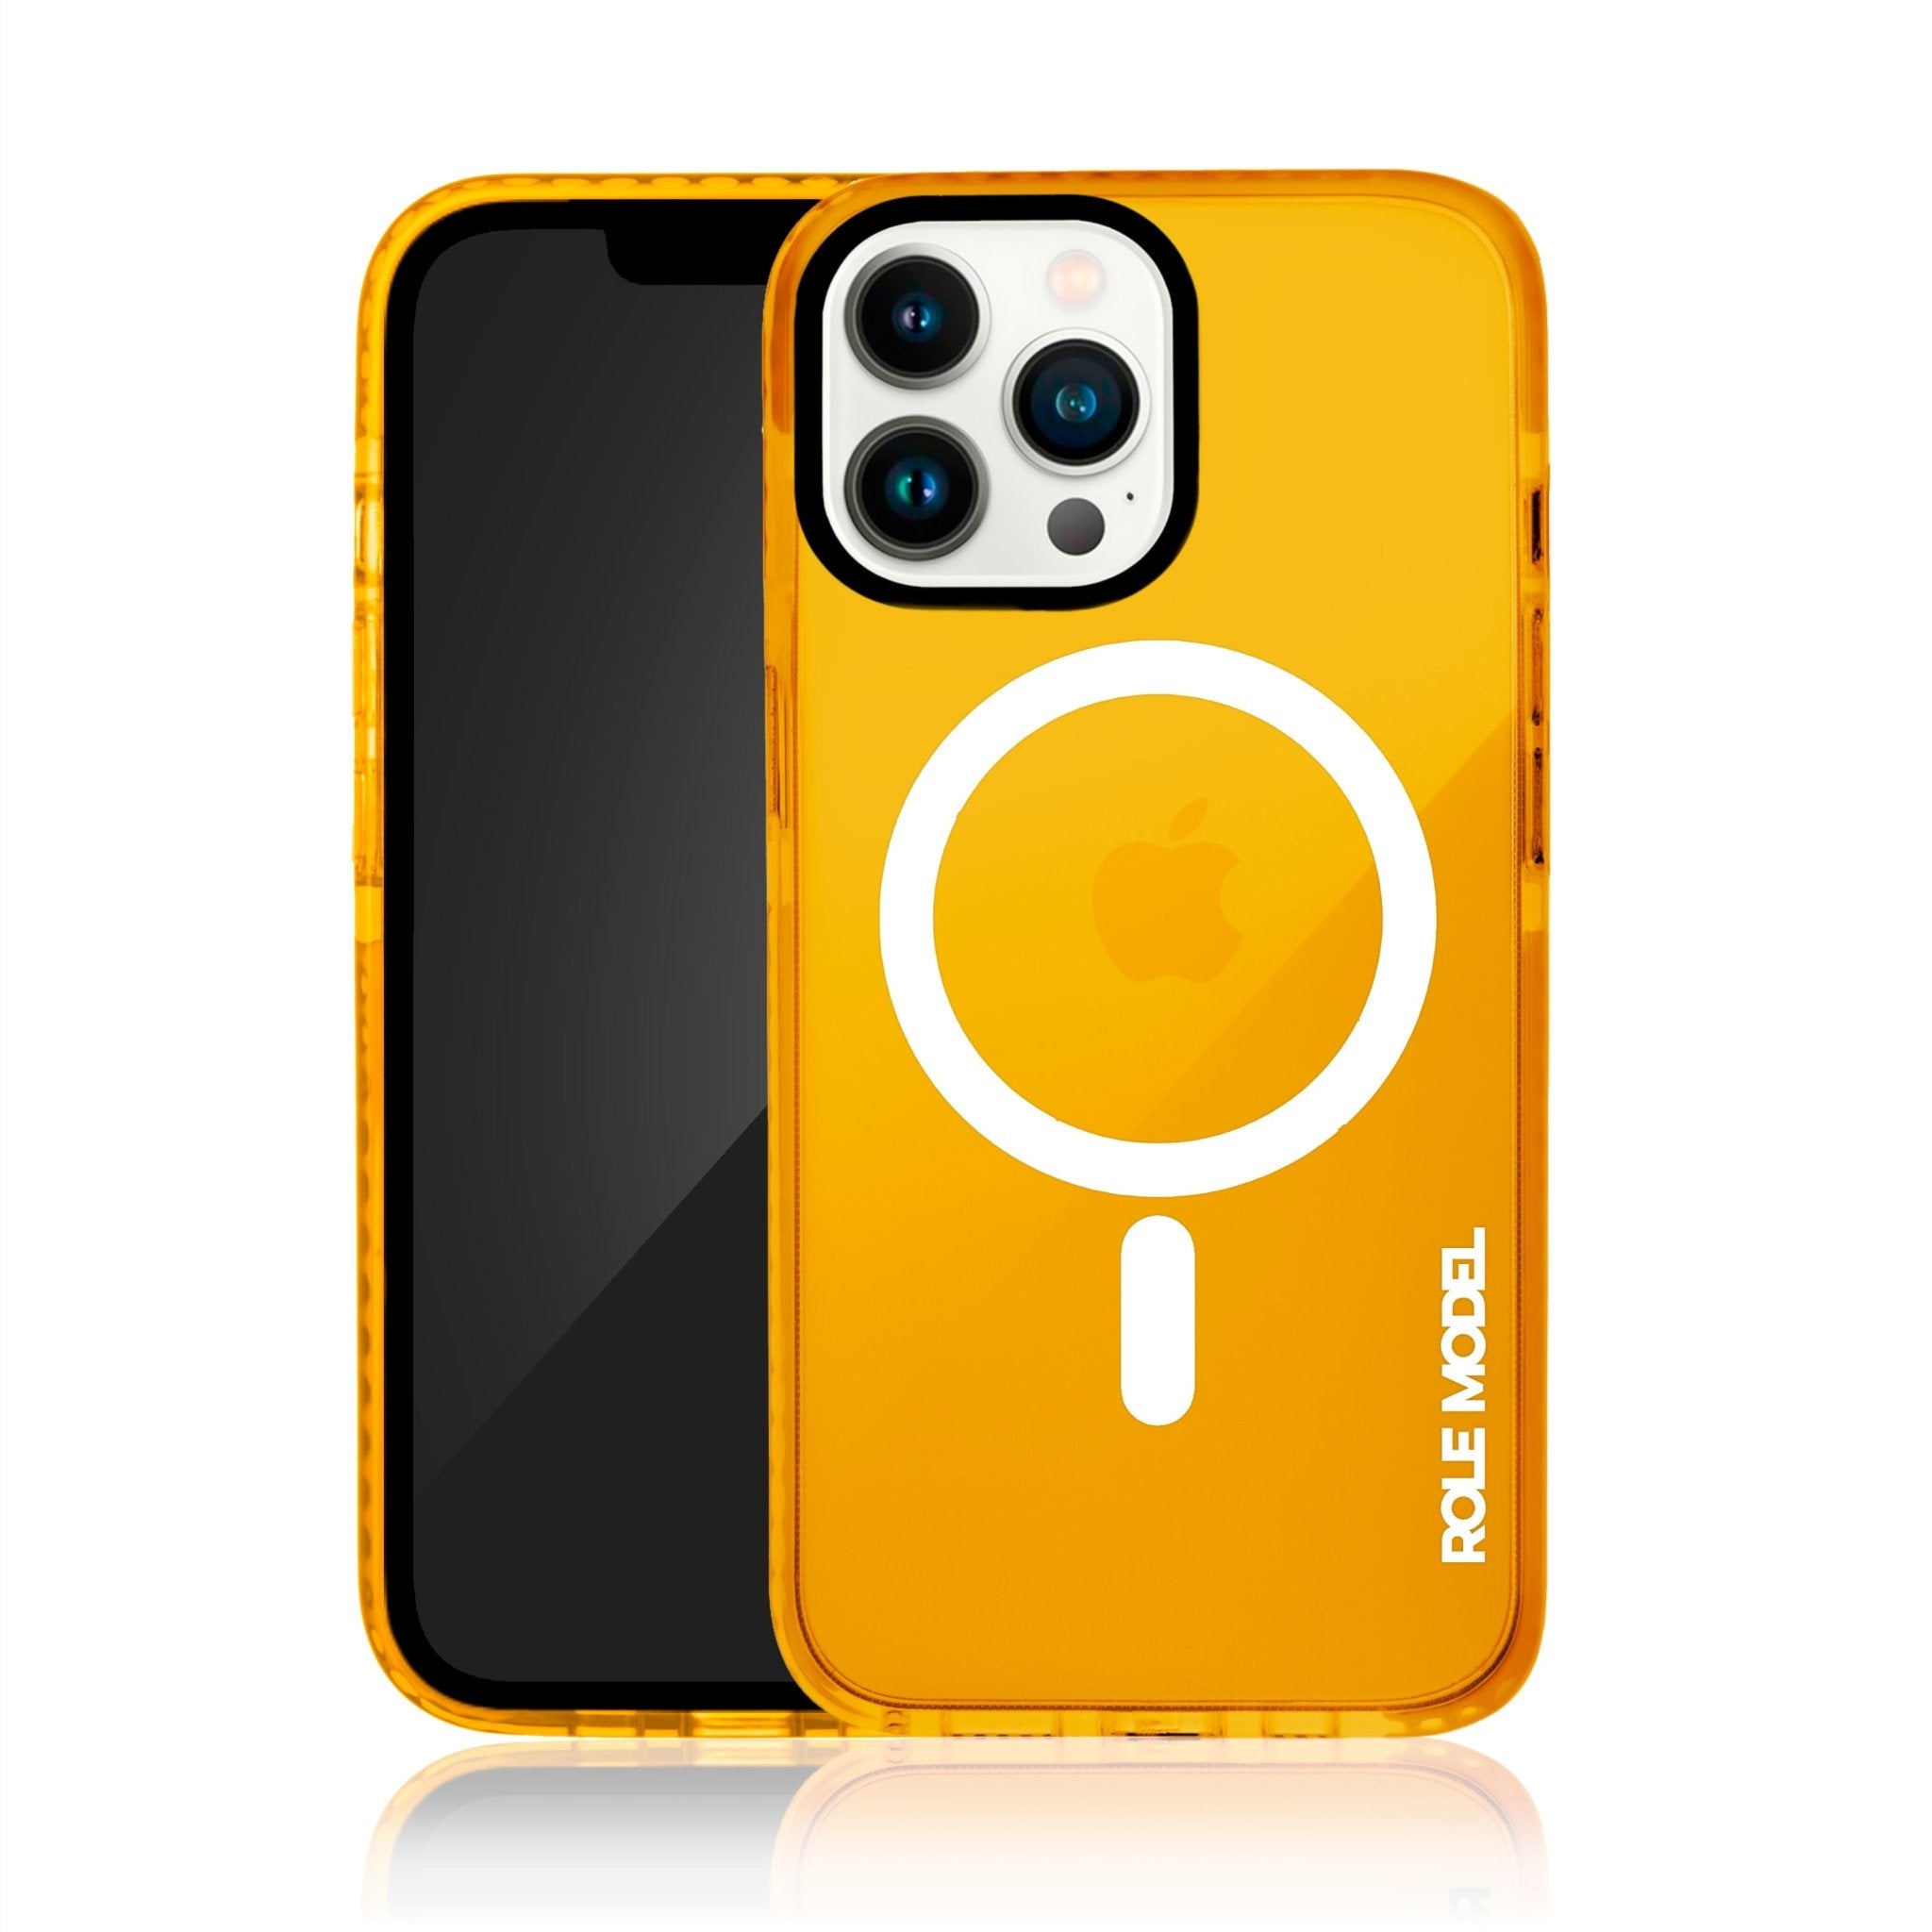 Cybercase™ Safety Orange Edition - ROLE MODEL